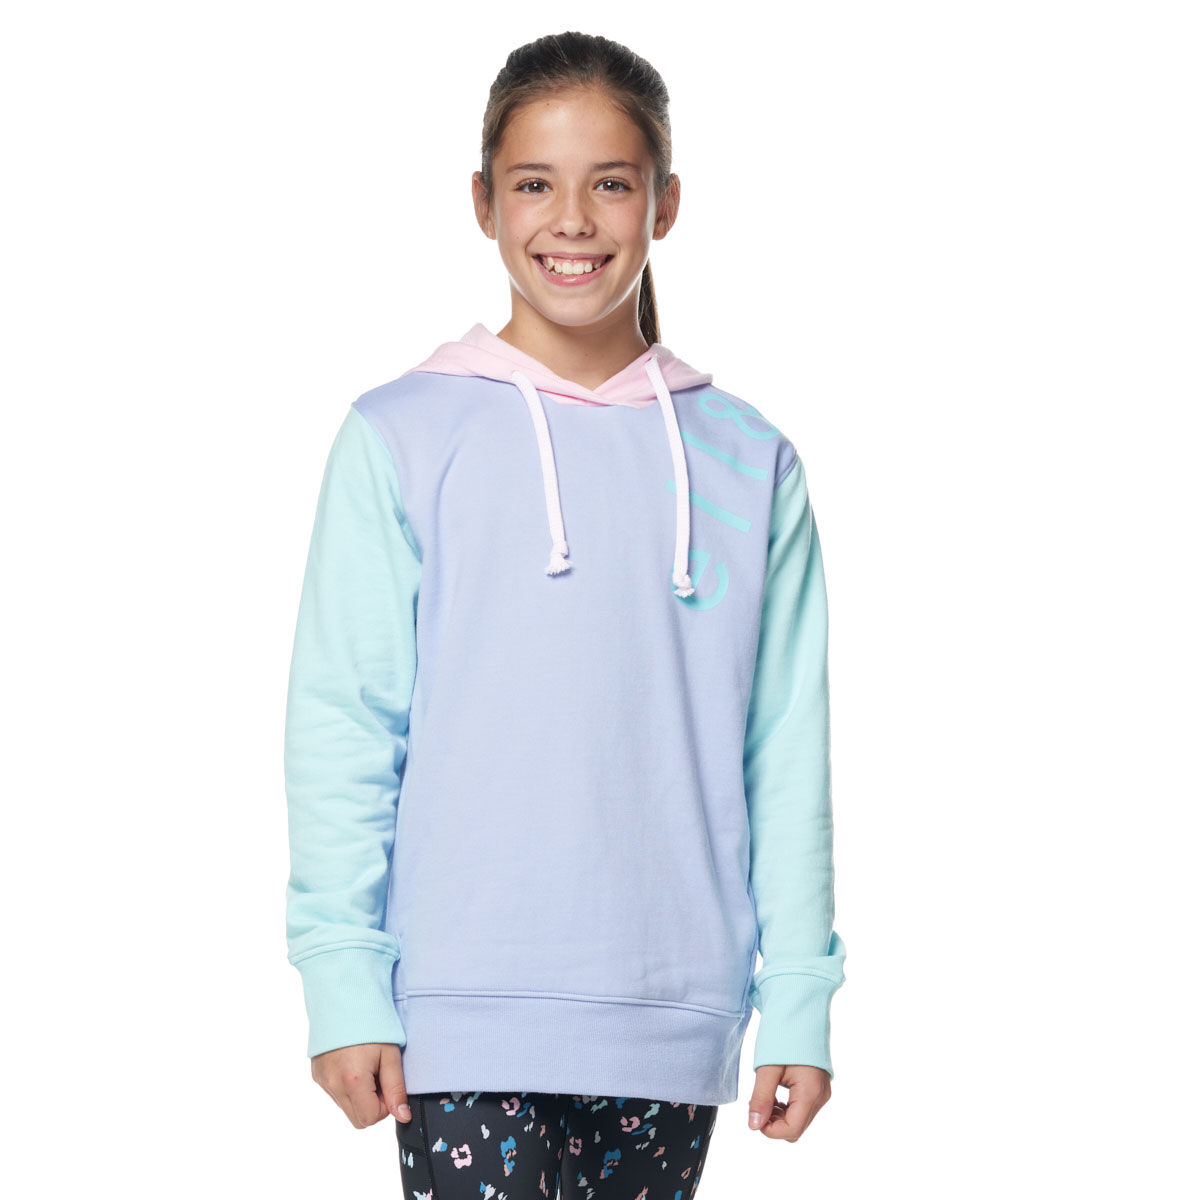 Blue 14Y discount 70% KIDS FASHION Jumpers & Sweatshirts NO STYLE NoName sweatshirt 